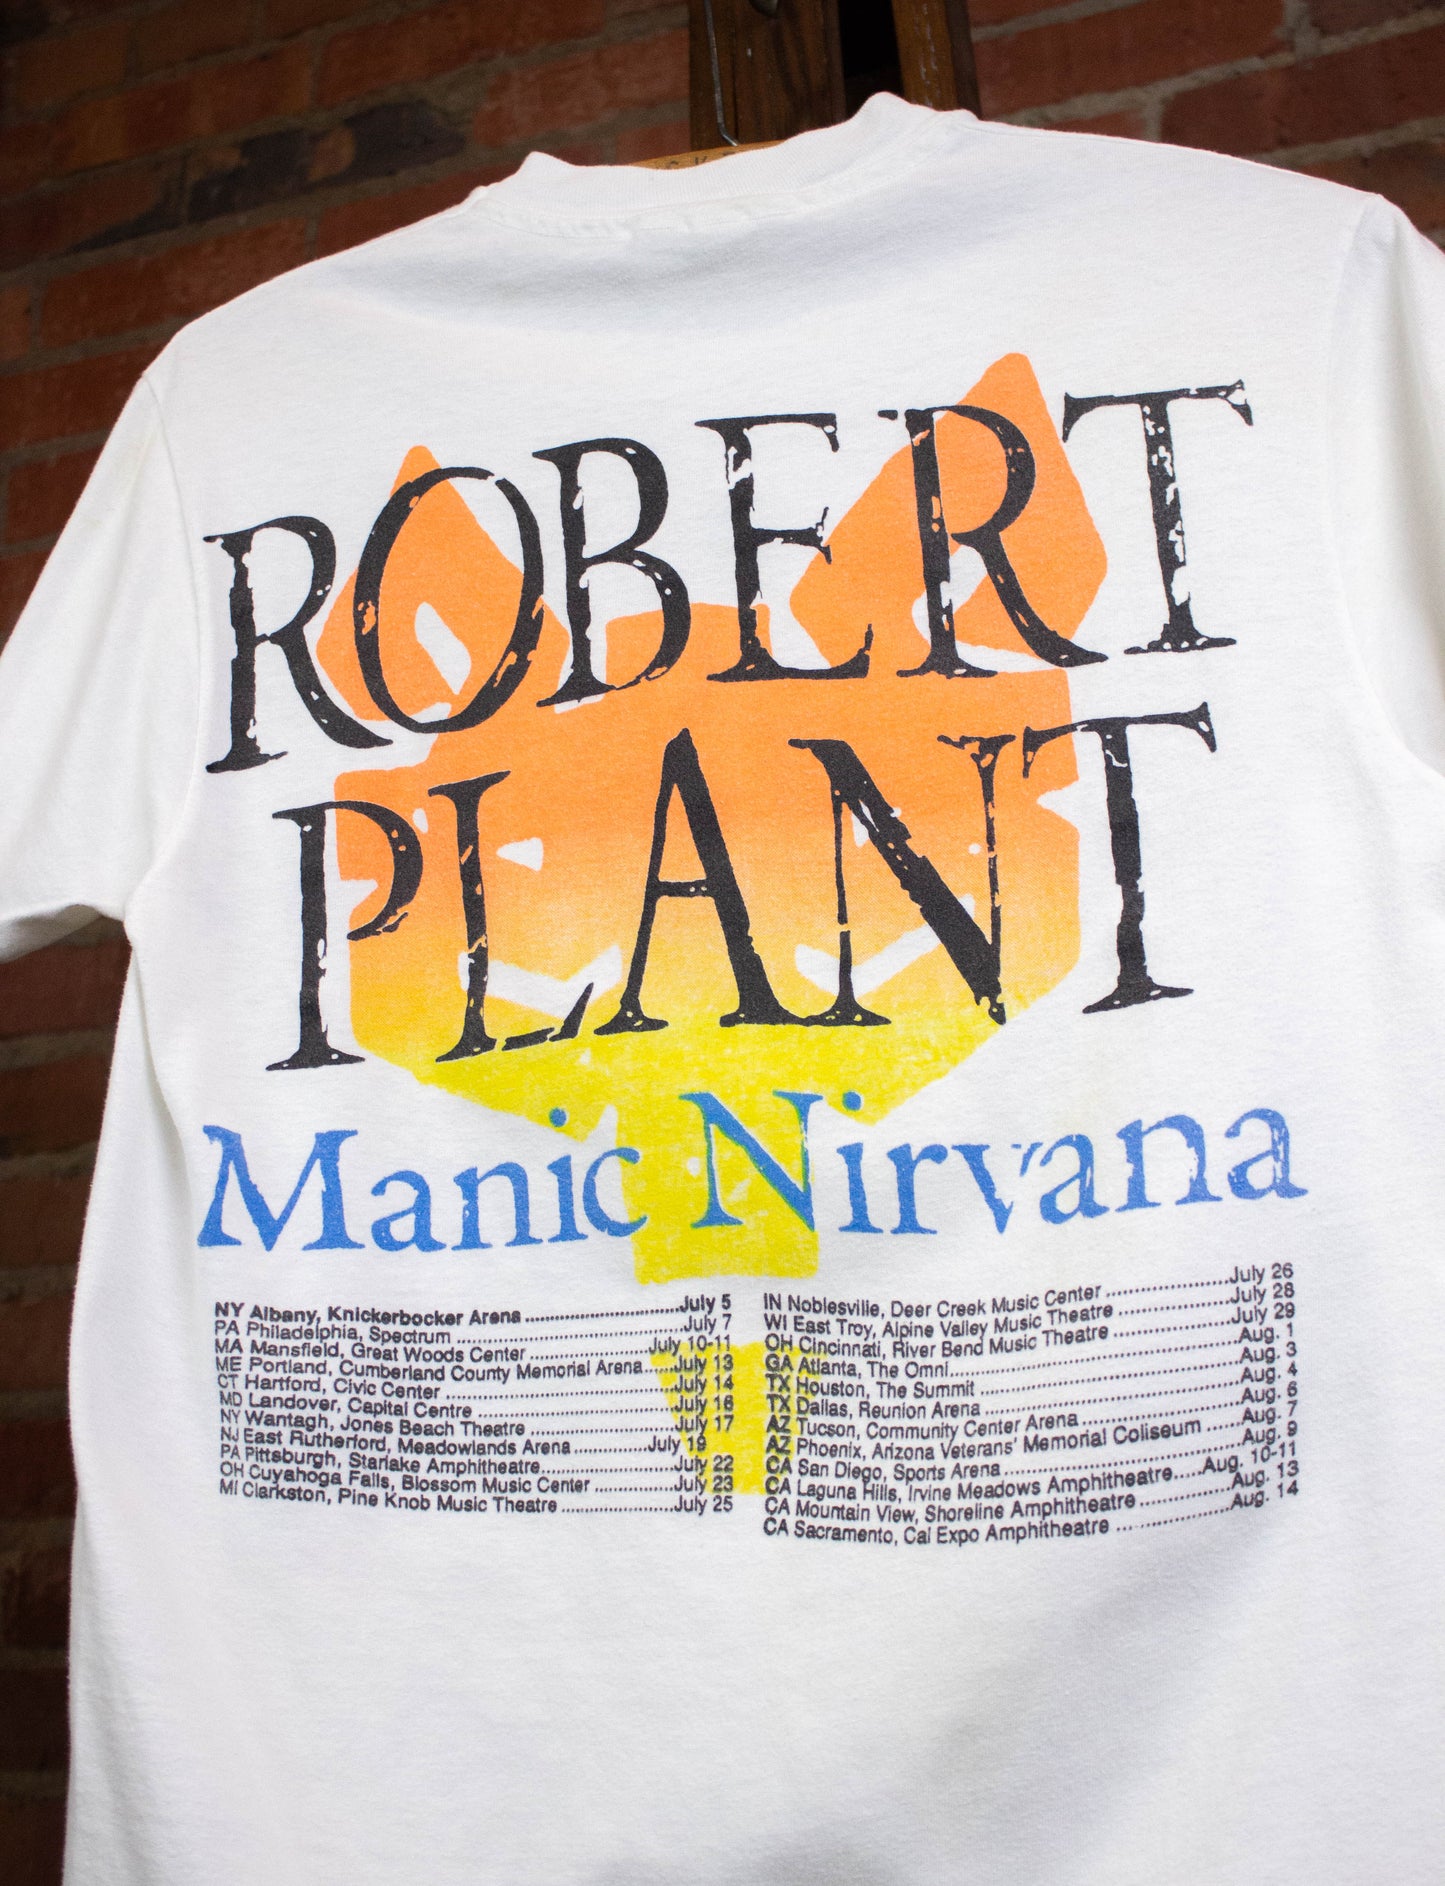 Vintage Robert Plant 1990 Manic Nirvana Concert T Shirt White Small